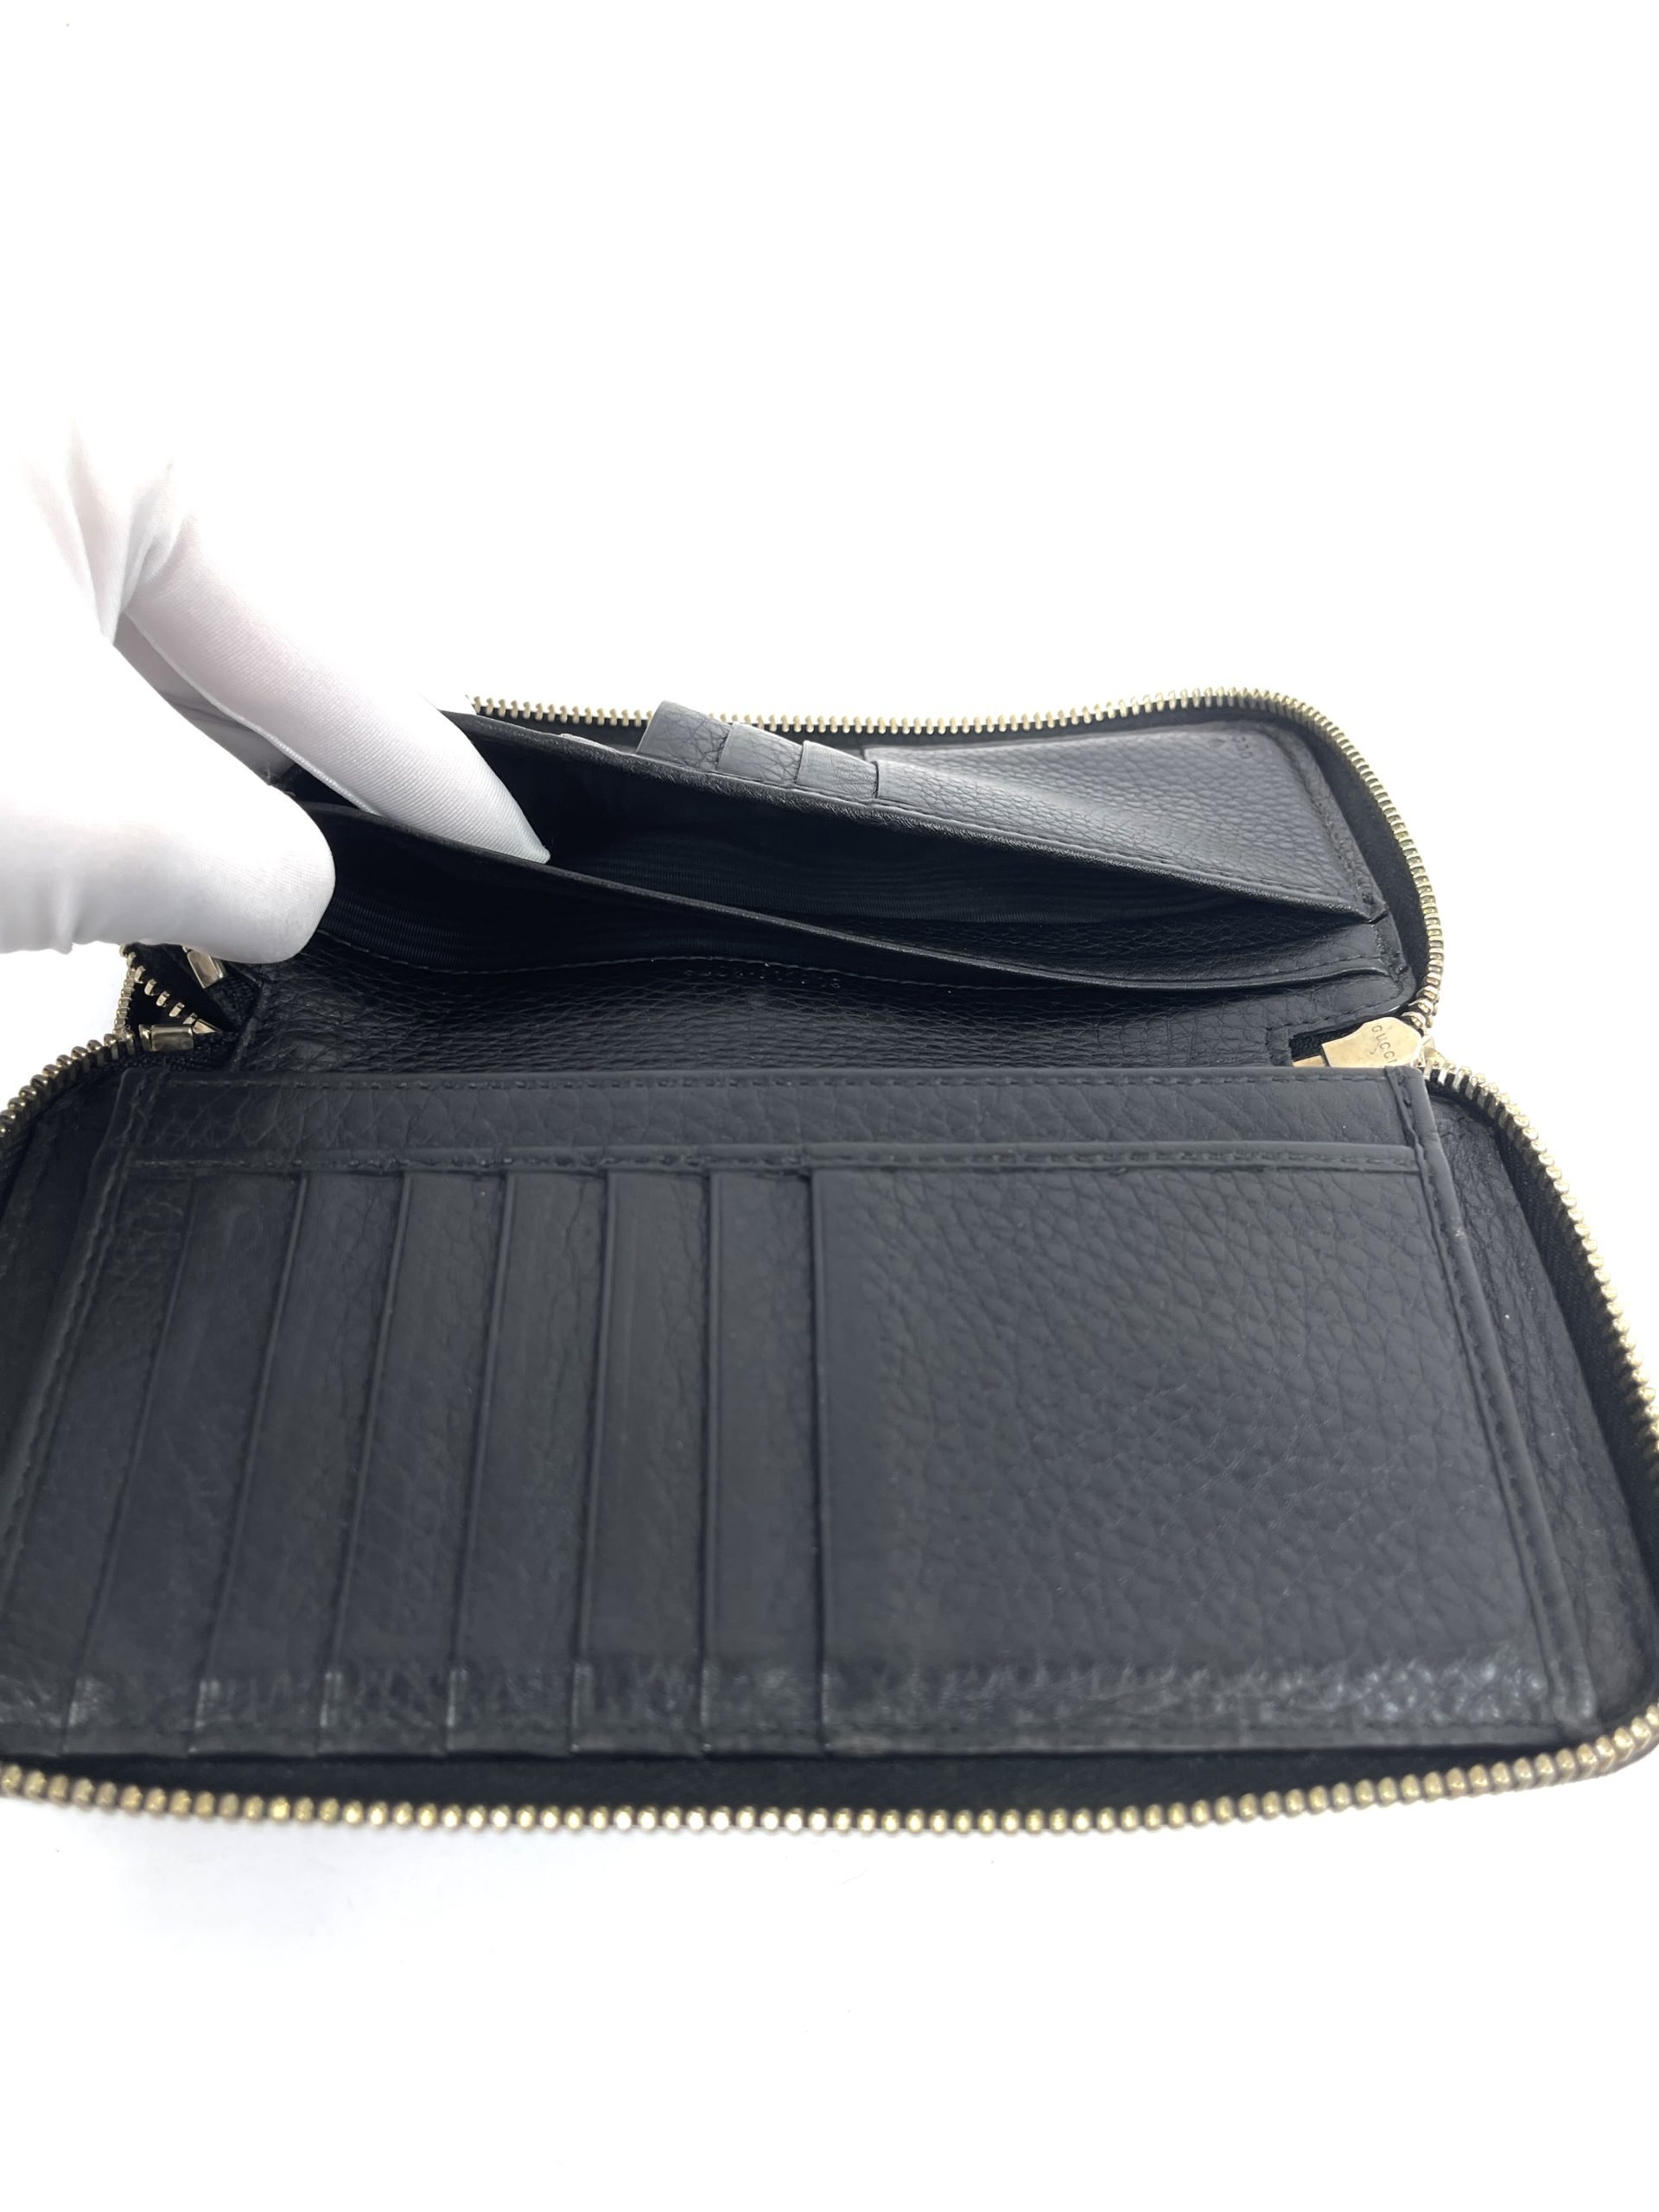 Gucci Soho Coin Purse Wallet Small Black